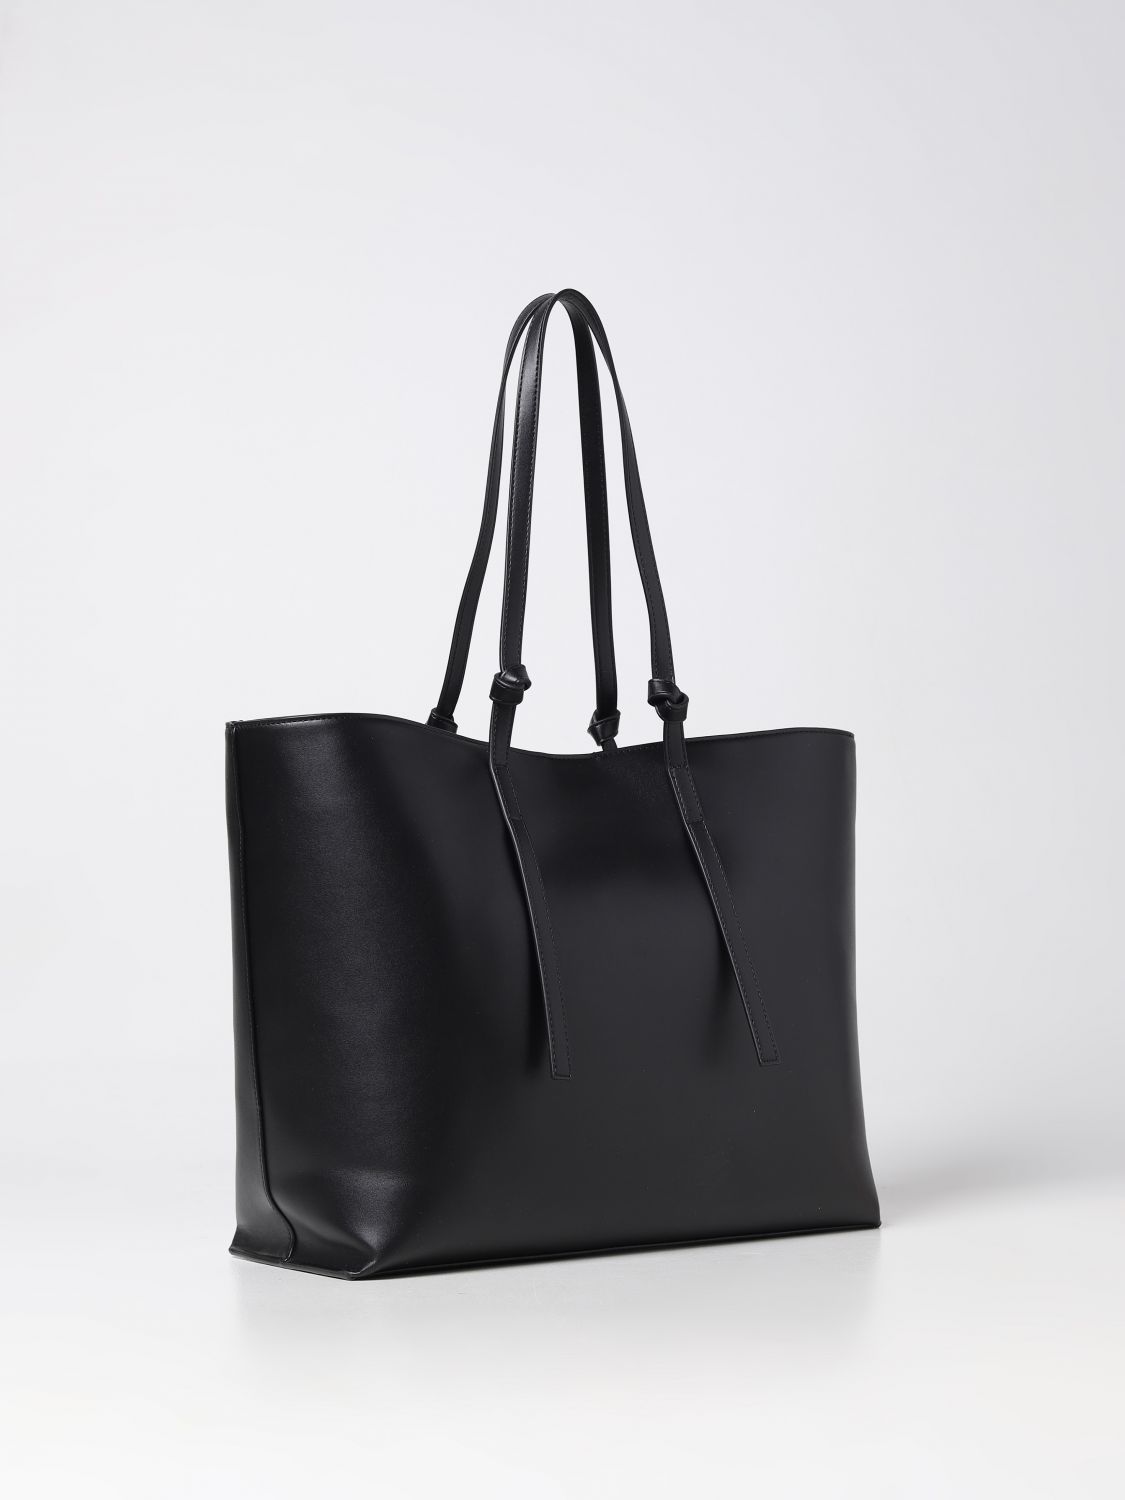 Zara Handbags for Women - Vestiaire Collective